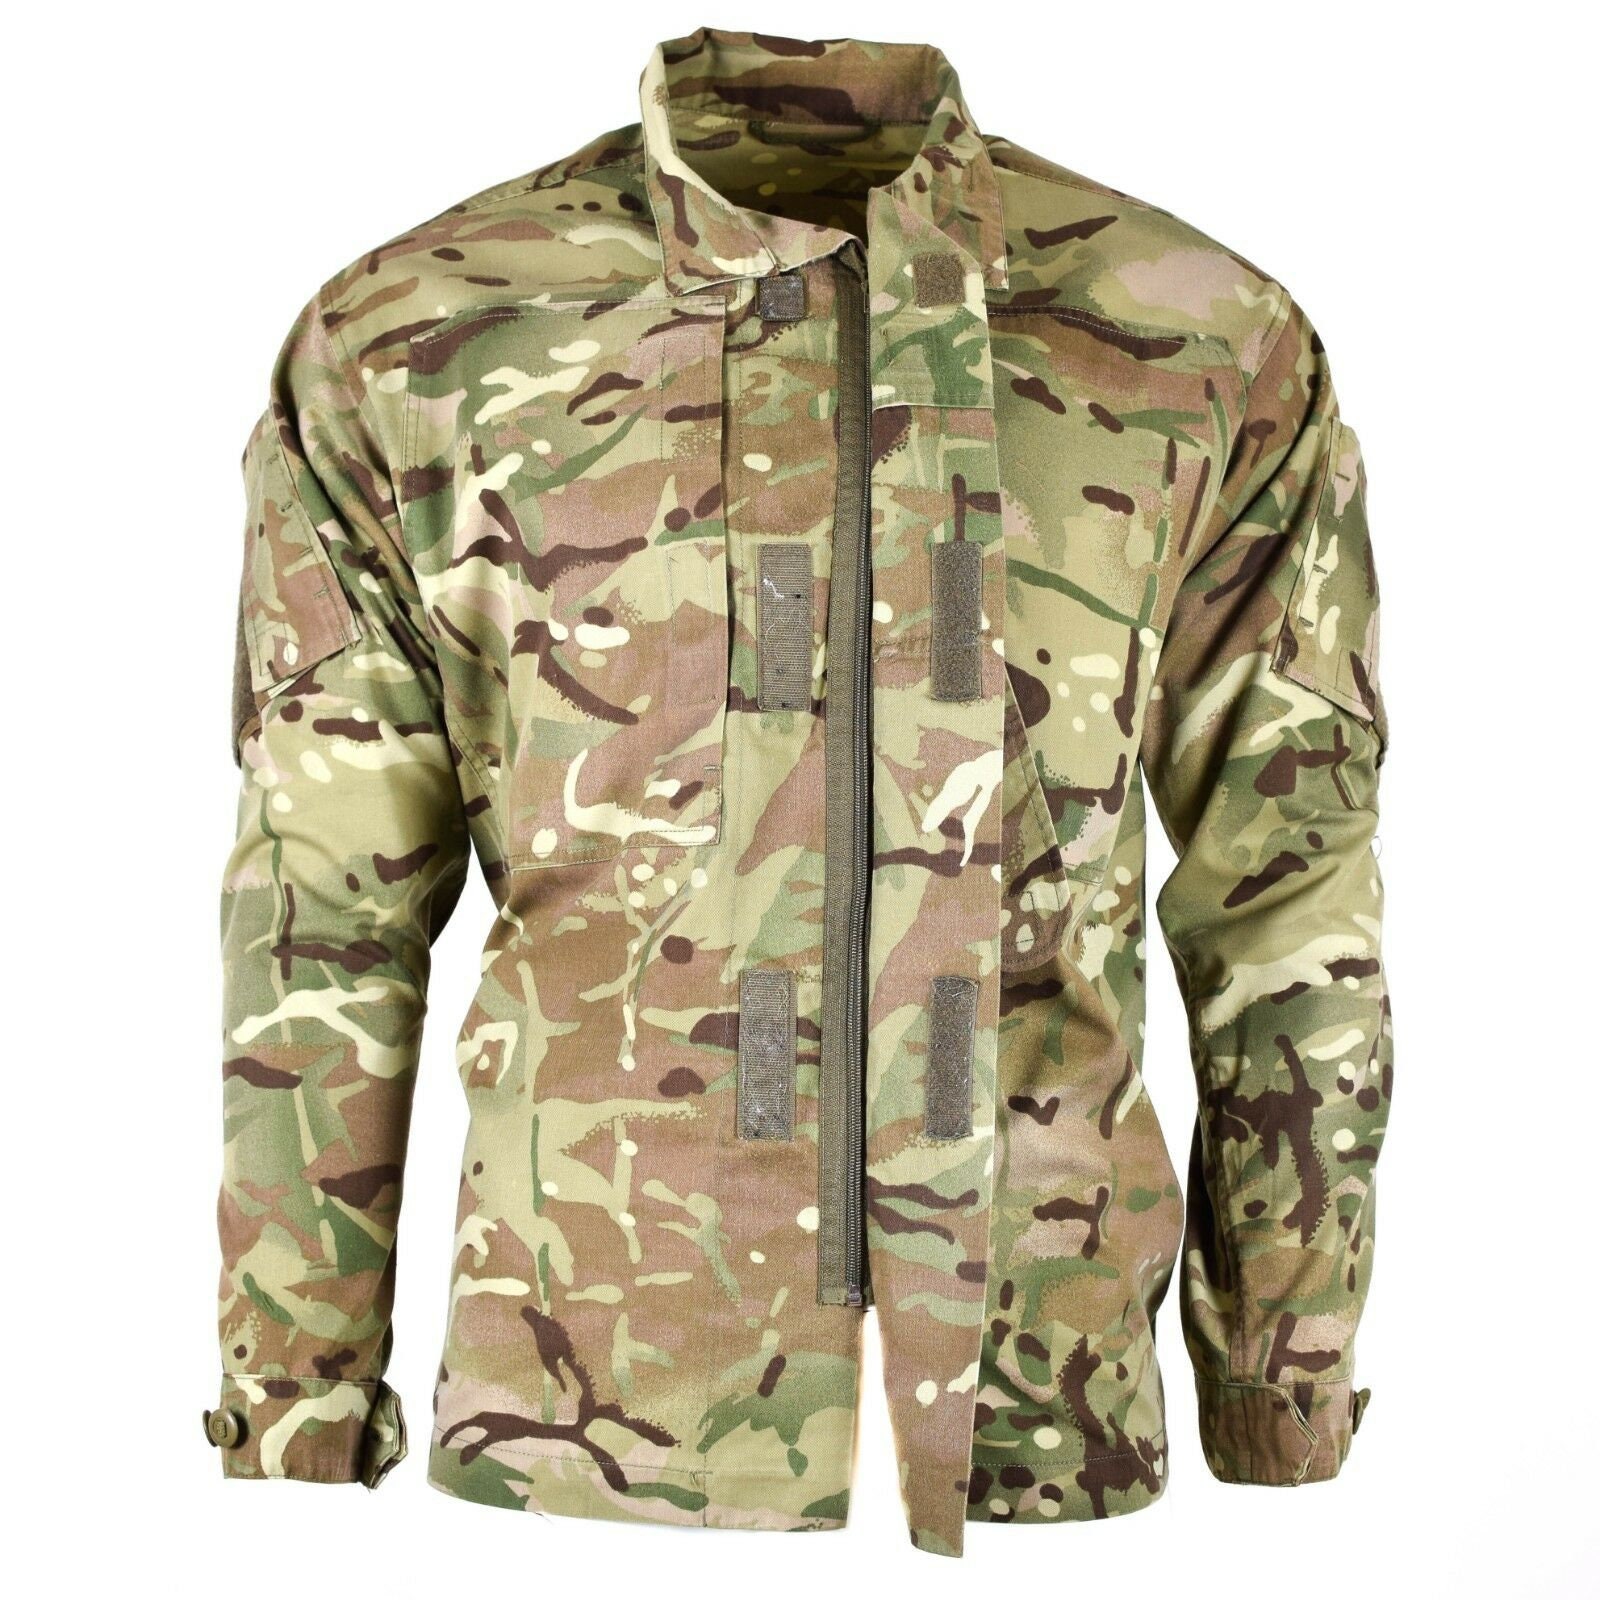 Genuine British army Issue combat MTP field jacket multicam military  soldier 95